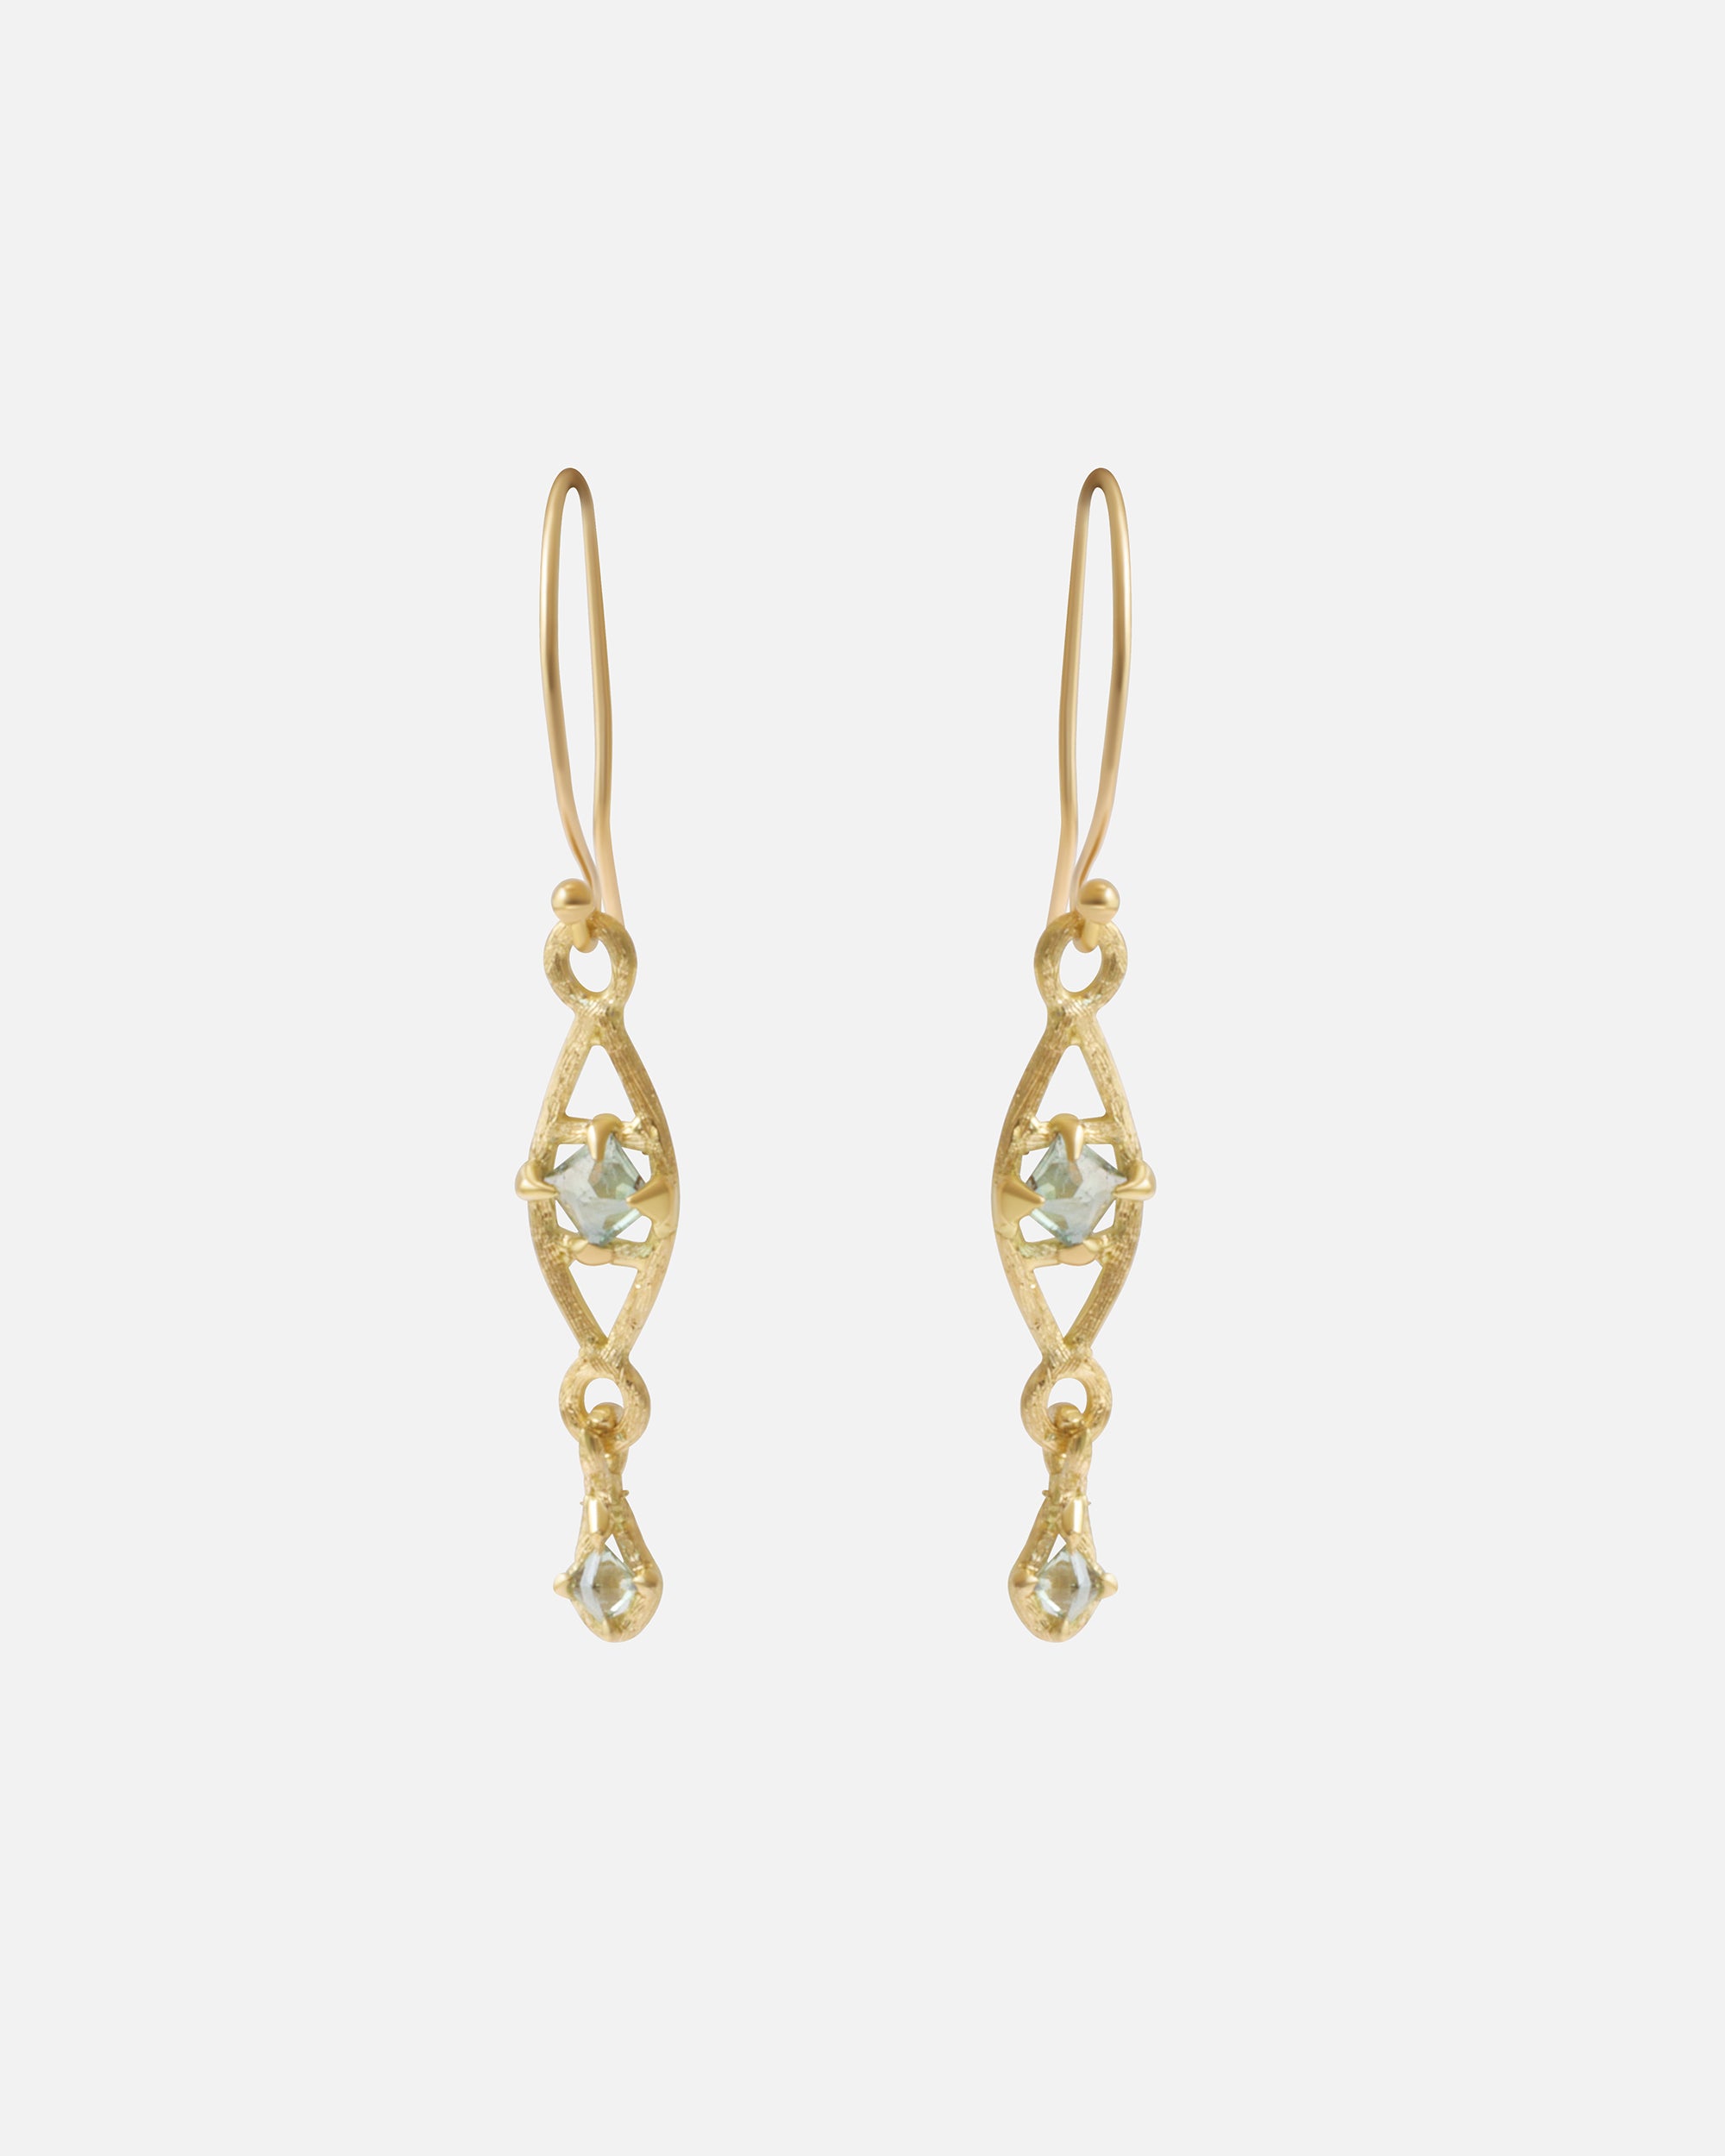 Silk / Pyramid Teal Sapphire Earrings By Hiroyo in earrings Category